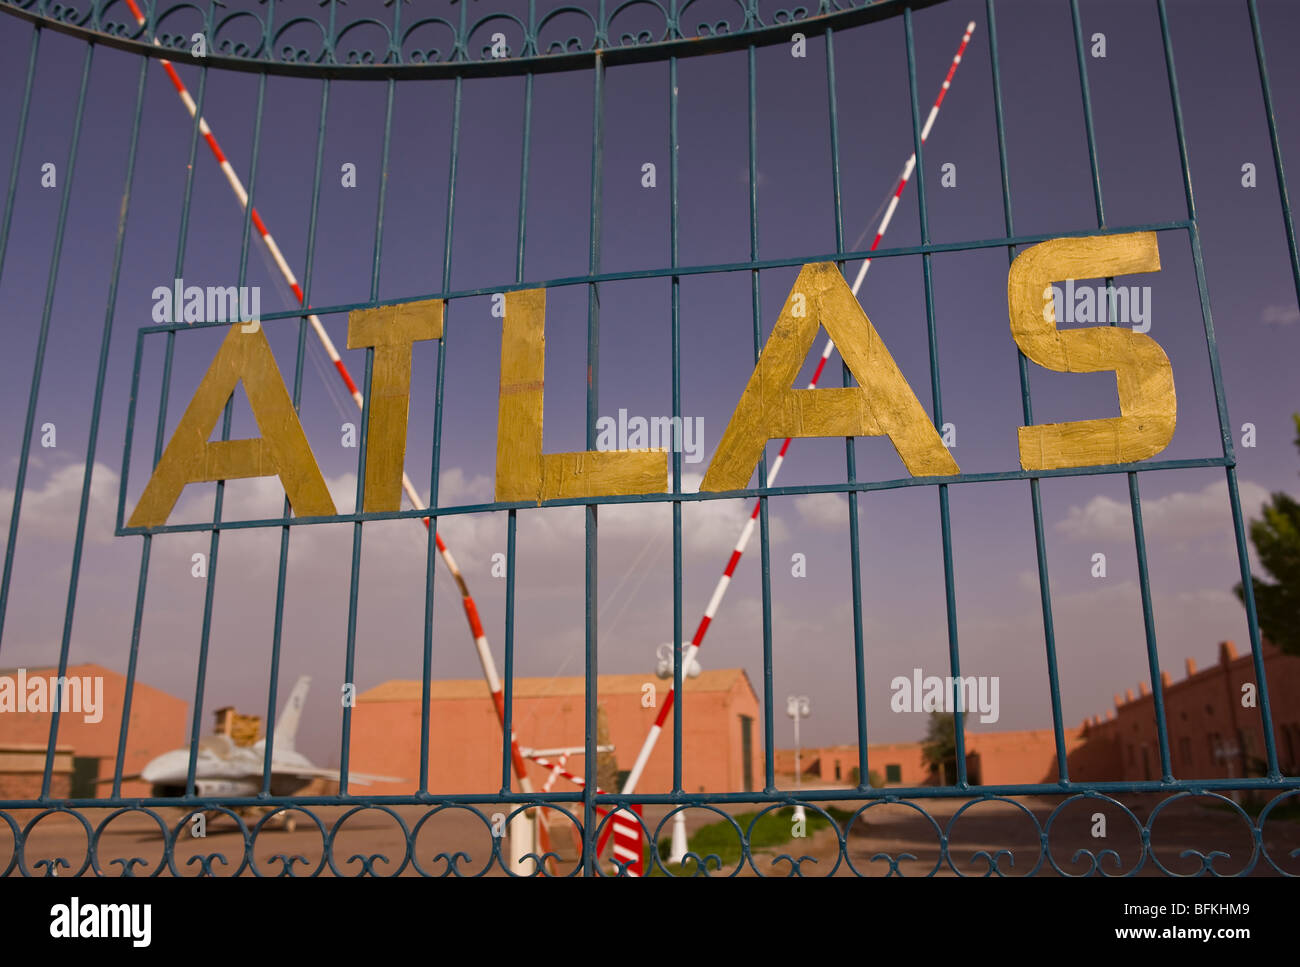 OUARZAZATE, Marokko - Tor zum Film-Sets in den Atlas Corporation Studios. Stockfoto